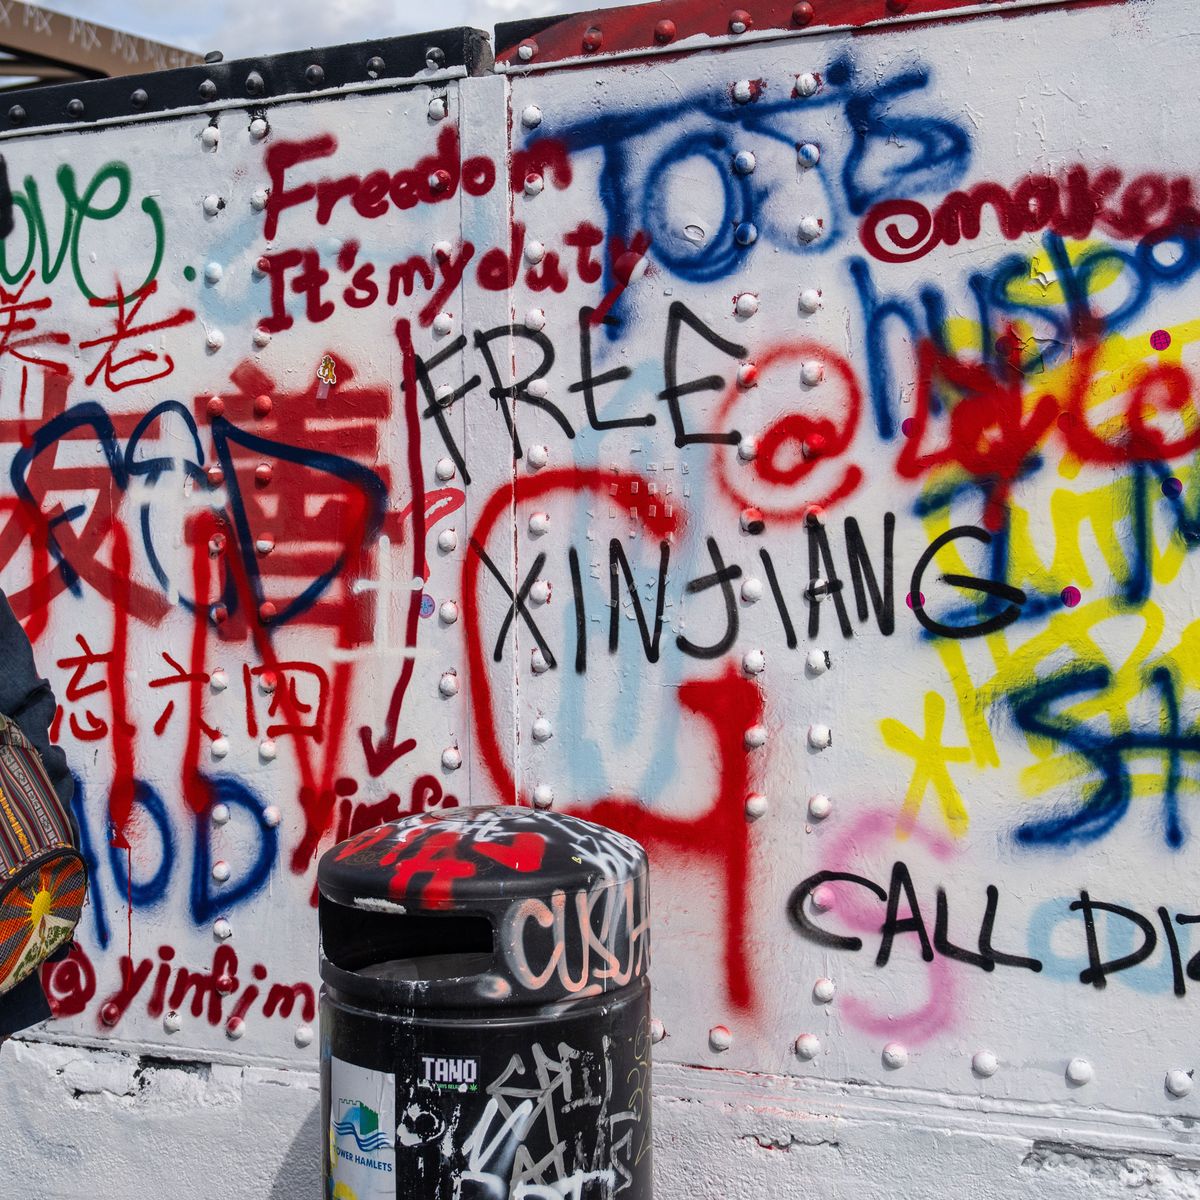 Chinese Communist Party slogans spark graffiti war on London's